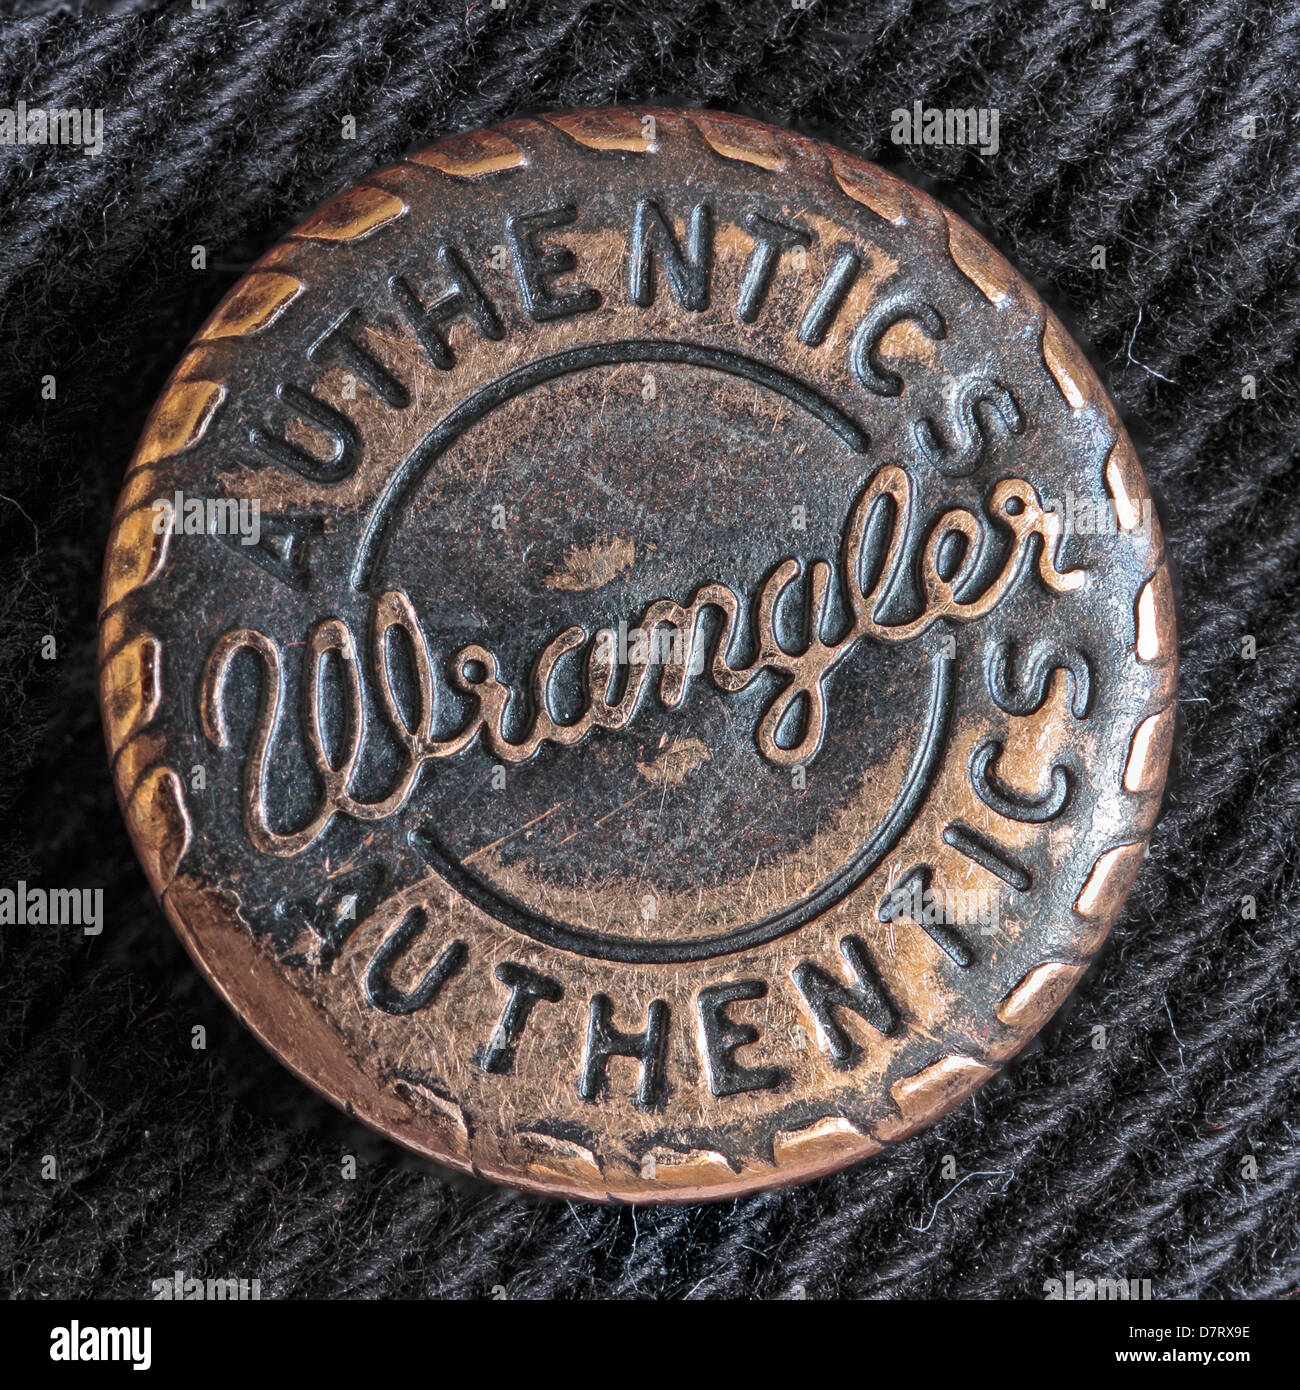 Wrangler Authentics Button on a black denim pair of jeans Stock Photo